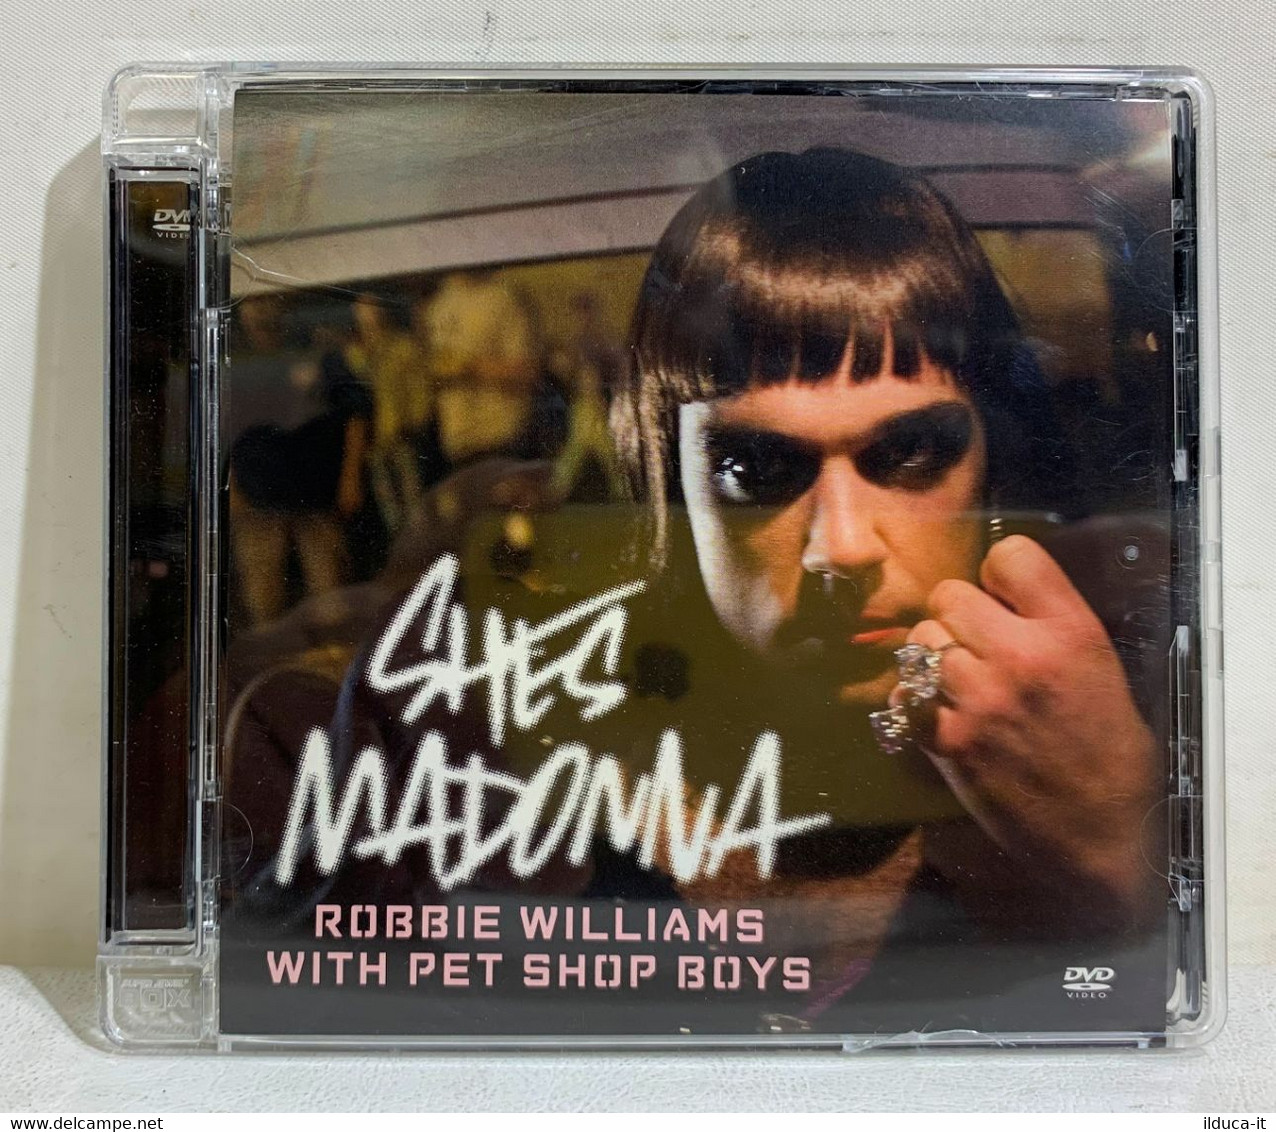 I103885 DVD Super Jewel Box - Robbie Williams With Pet Shop Boys - She's Madonna - Concert & Music